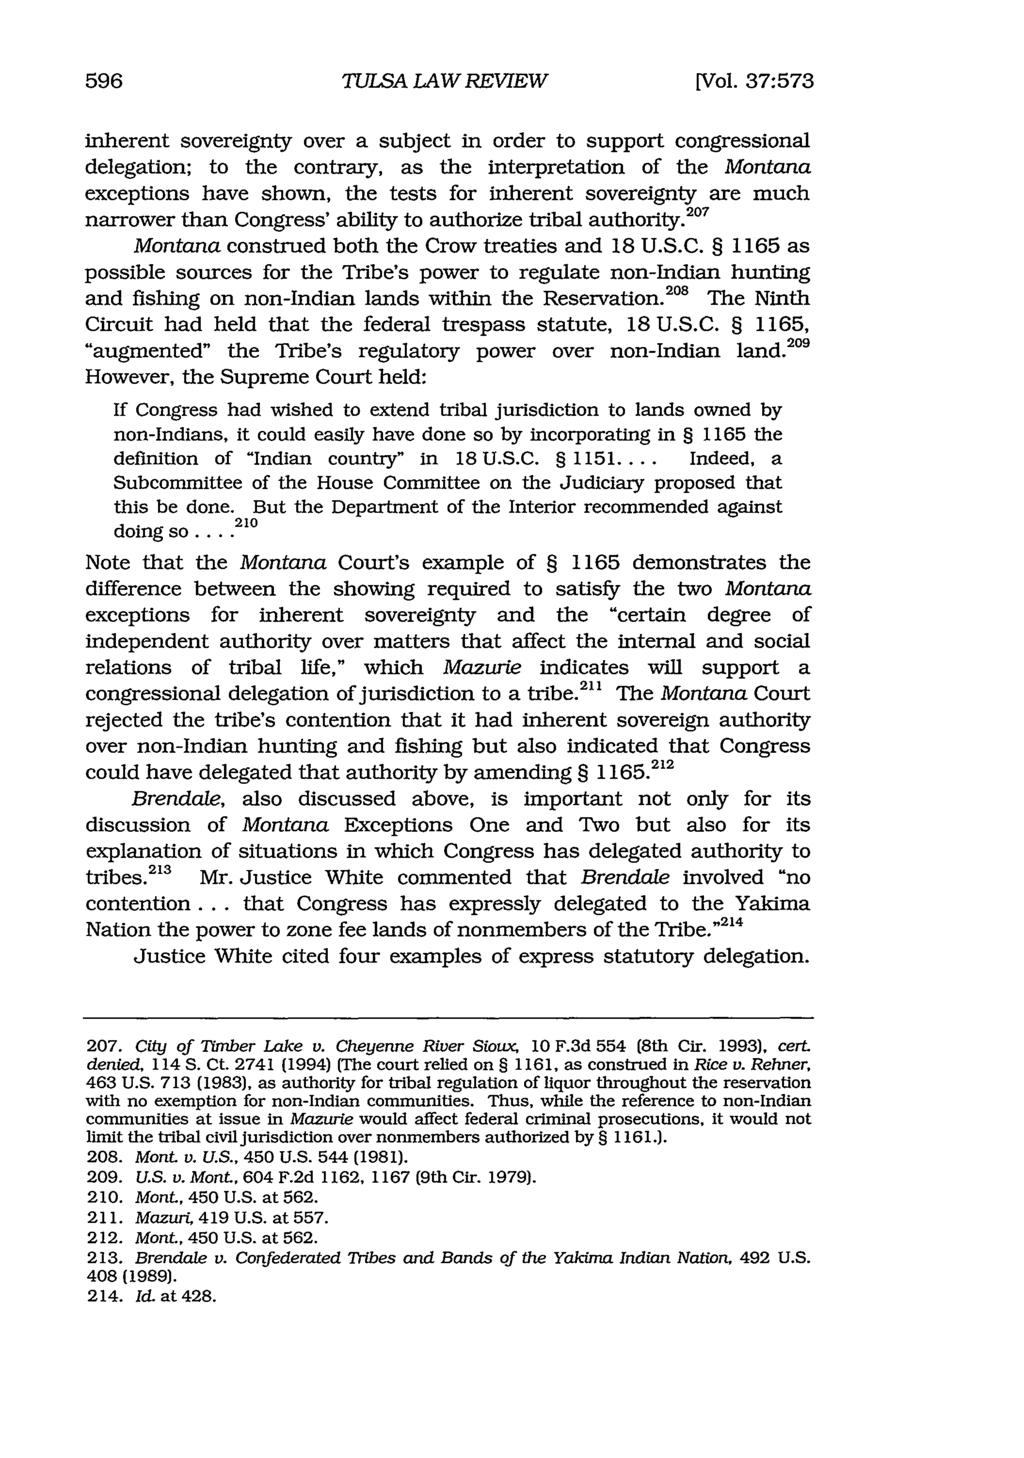 596 Tulsa Law Review, Vol. 37 [2001], Iss. 2, Art. 7 TULSA LAW REVIEW [Vol.